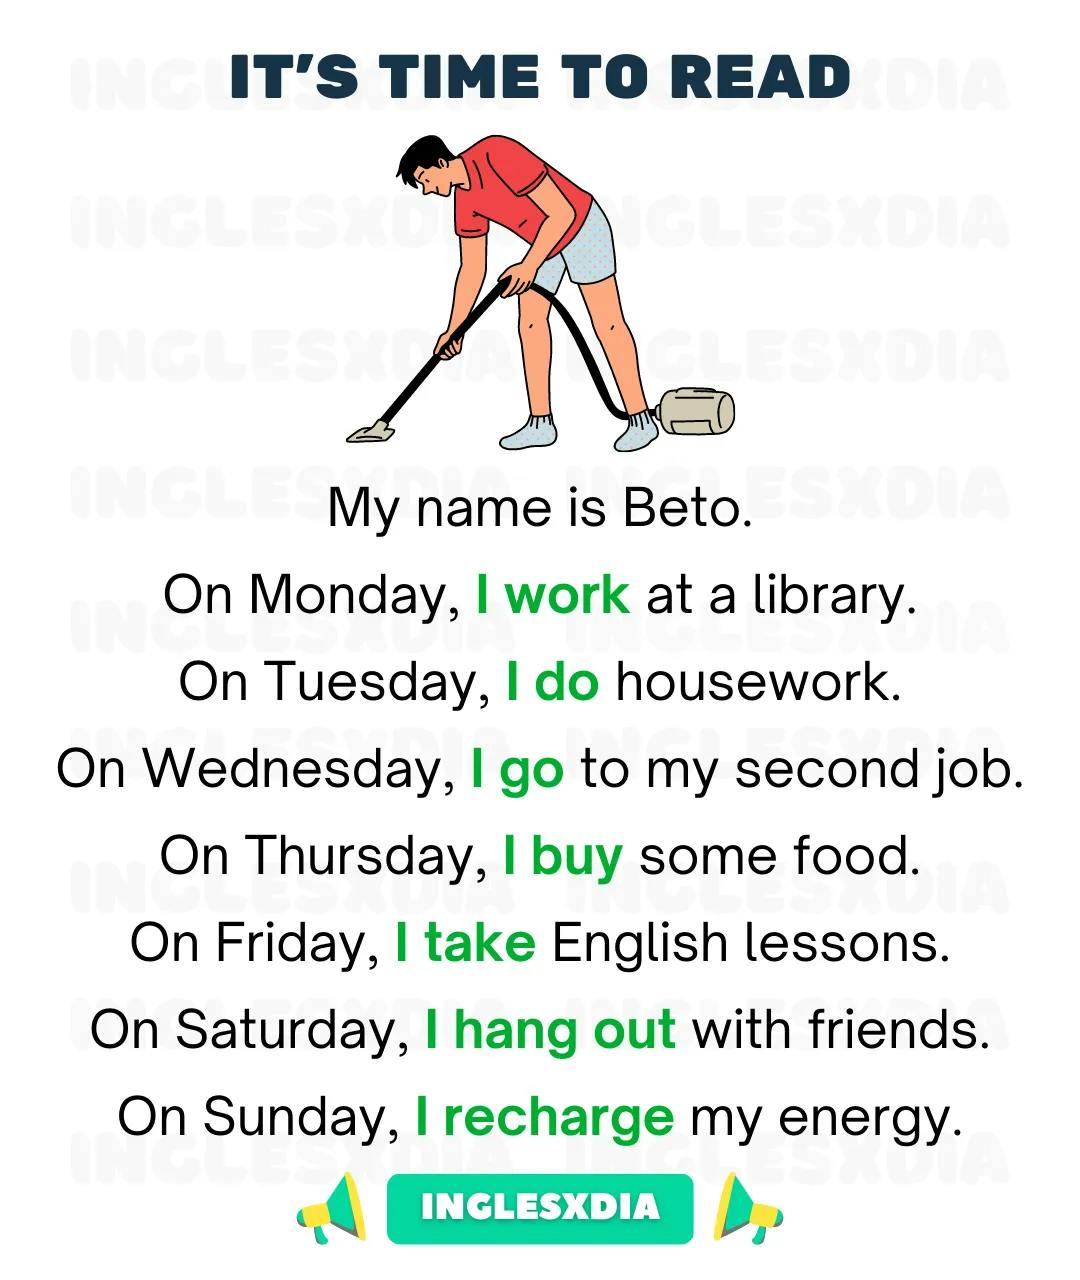 Beto's routine